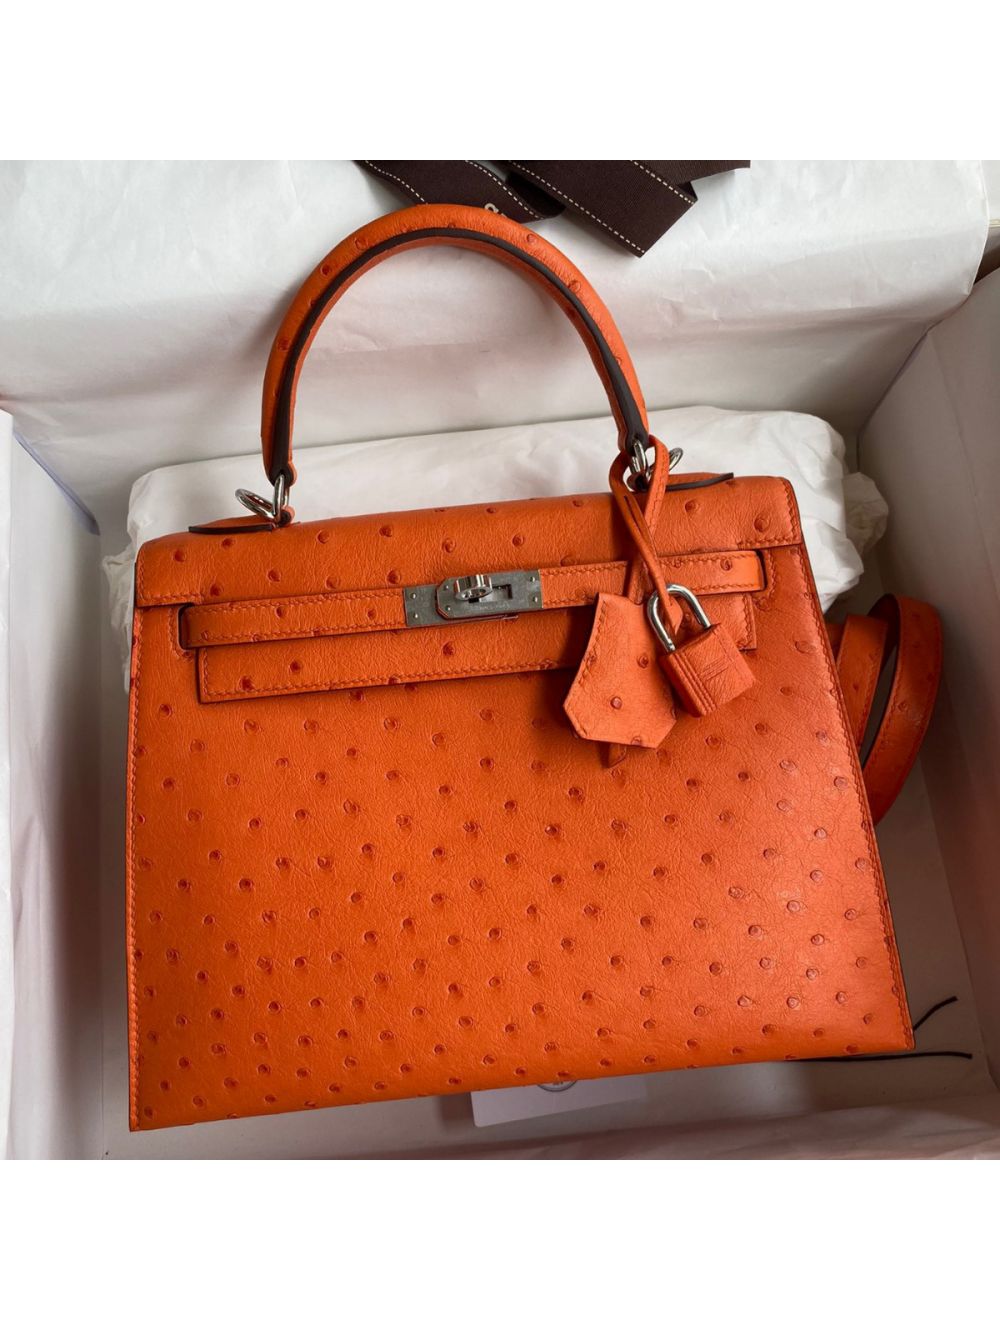 Replica Hermes Kelly Sellier 25 Handmade Bag In Orange Ostrich Leather